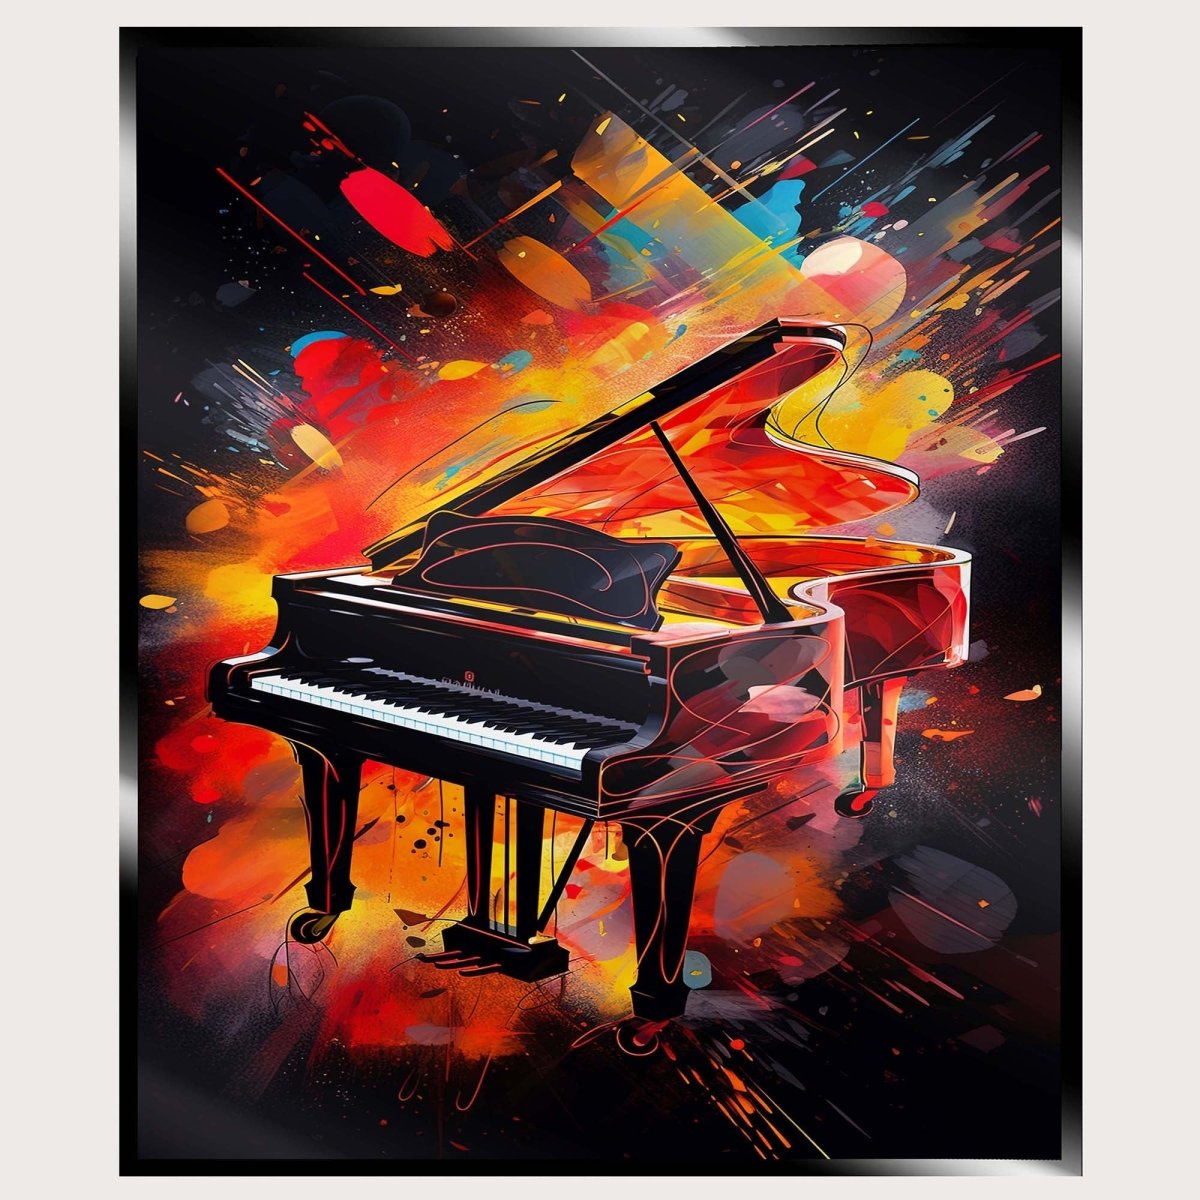 Illuminated Wall Art - Retro Piano - madaboutneon